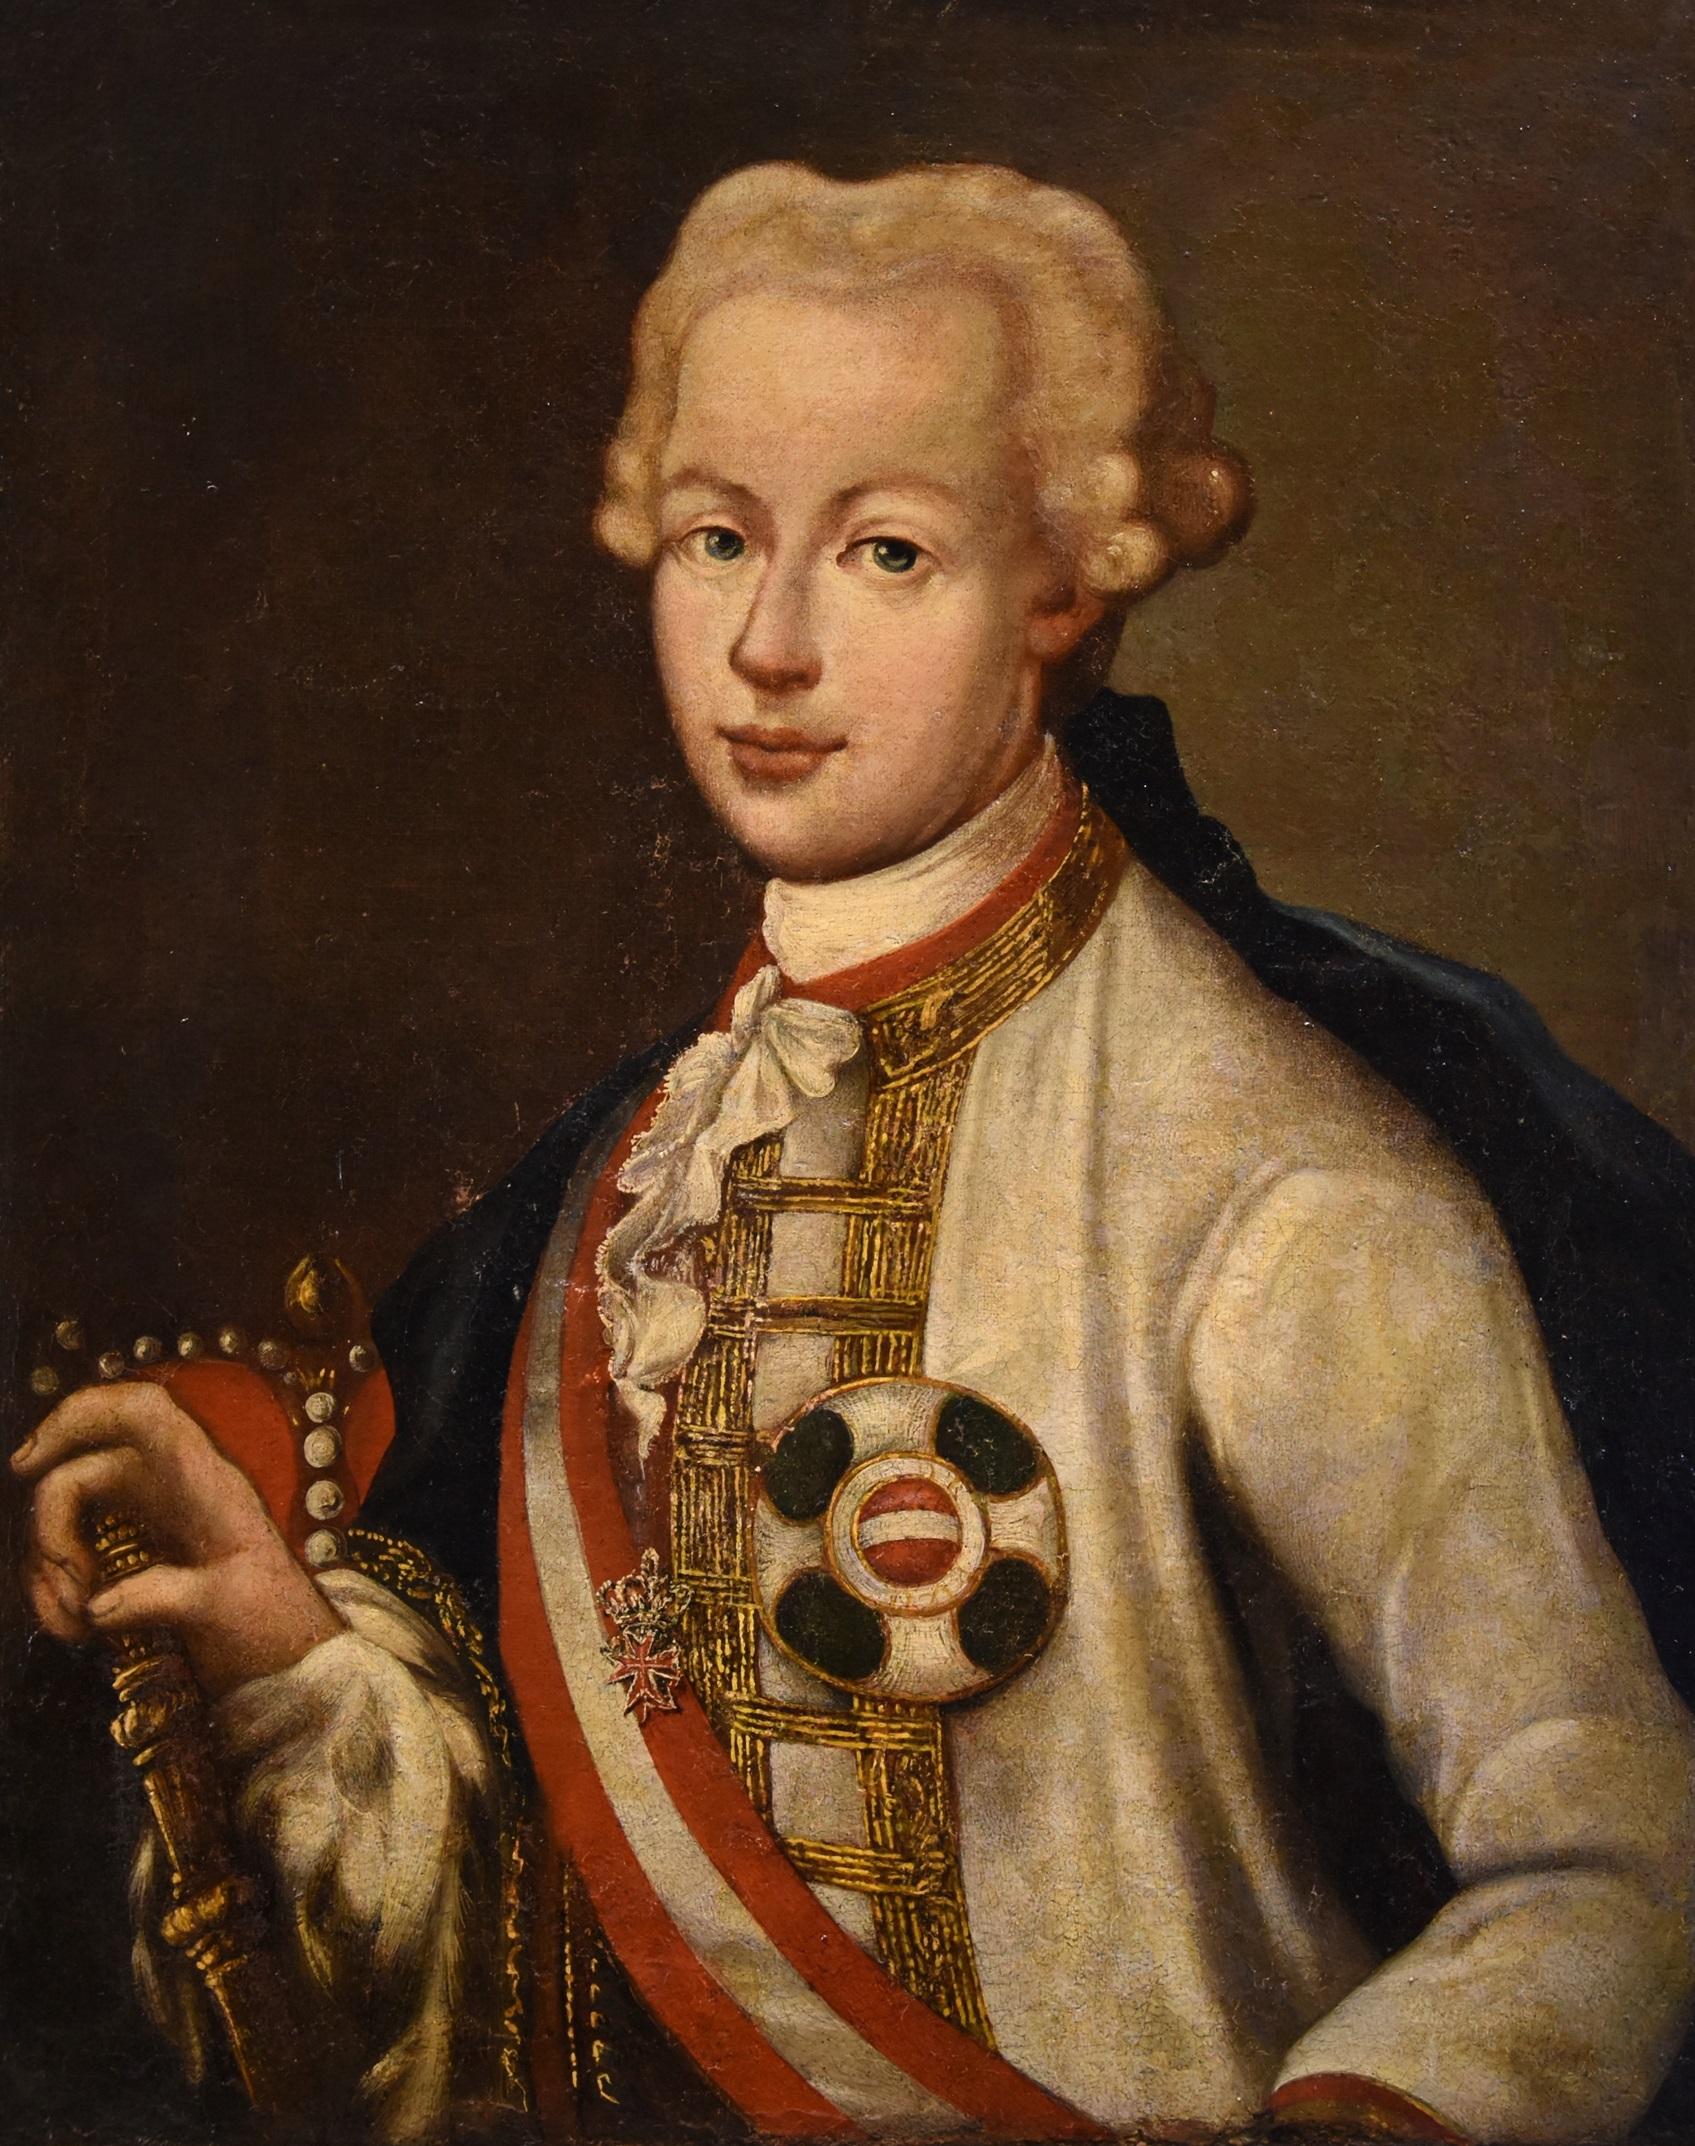 Portrait Emperor Peter Van Meytens Paint Oil on canvas 18th Century Flemish Art - Painting by  Martin van Meytens (Stockholm 1695 - Vienna 1770), workshop of